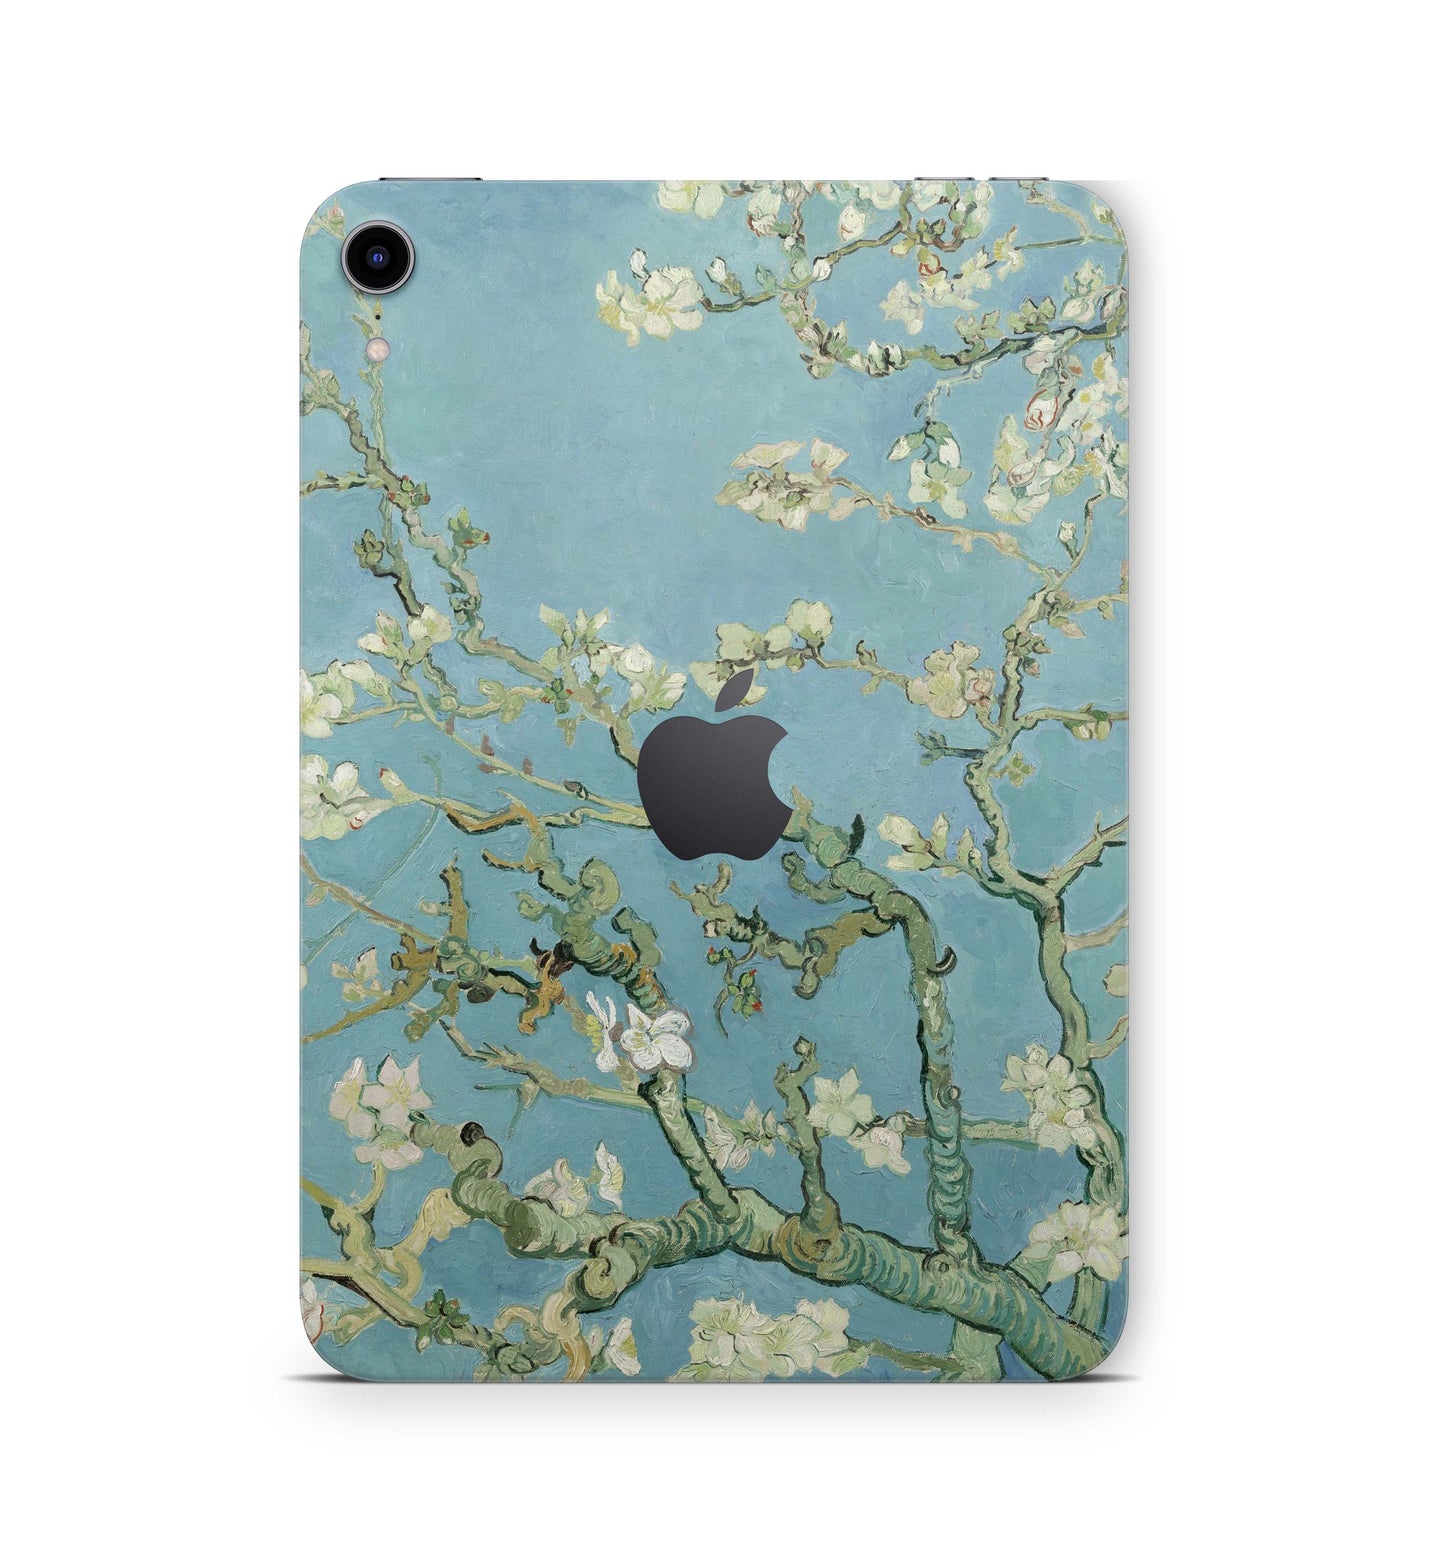 Apple iPad Skin Design Cover Folie Vinyl Skins & Wraps für alle iPad Modelle Aufkleber Skins4u Blossoming  